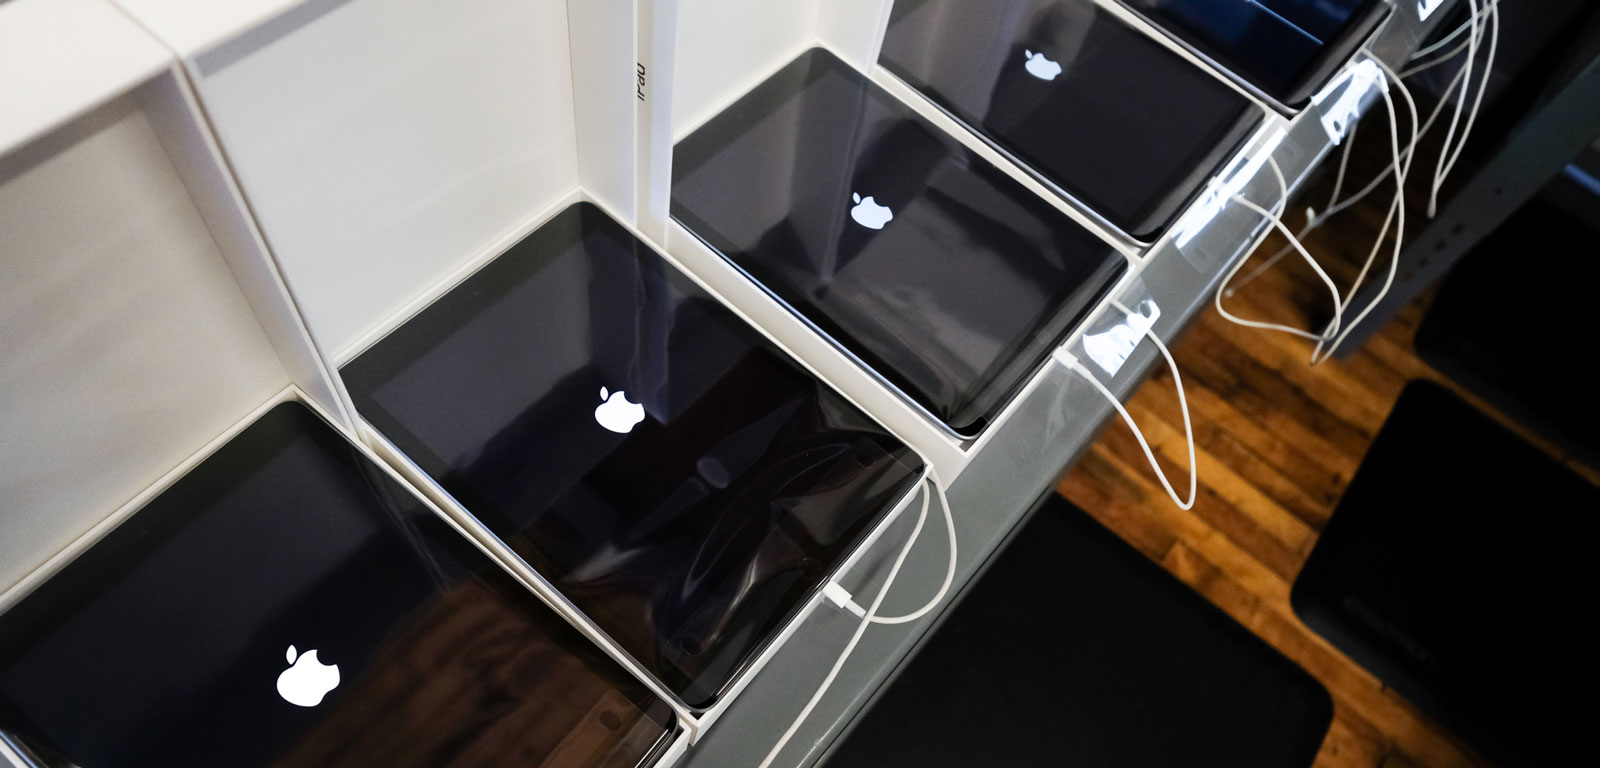 Line of iPads being configured